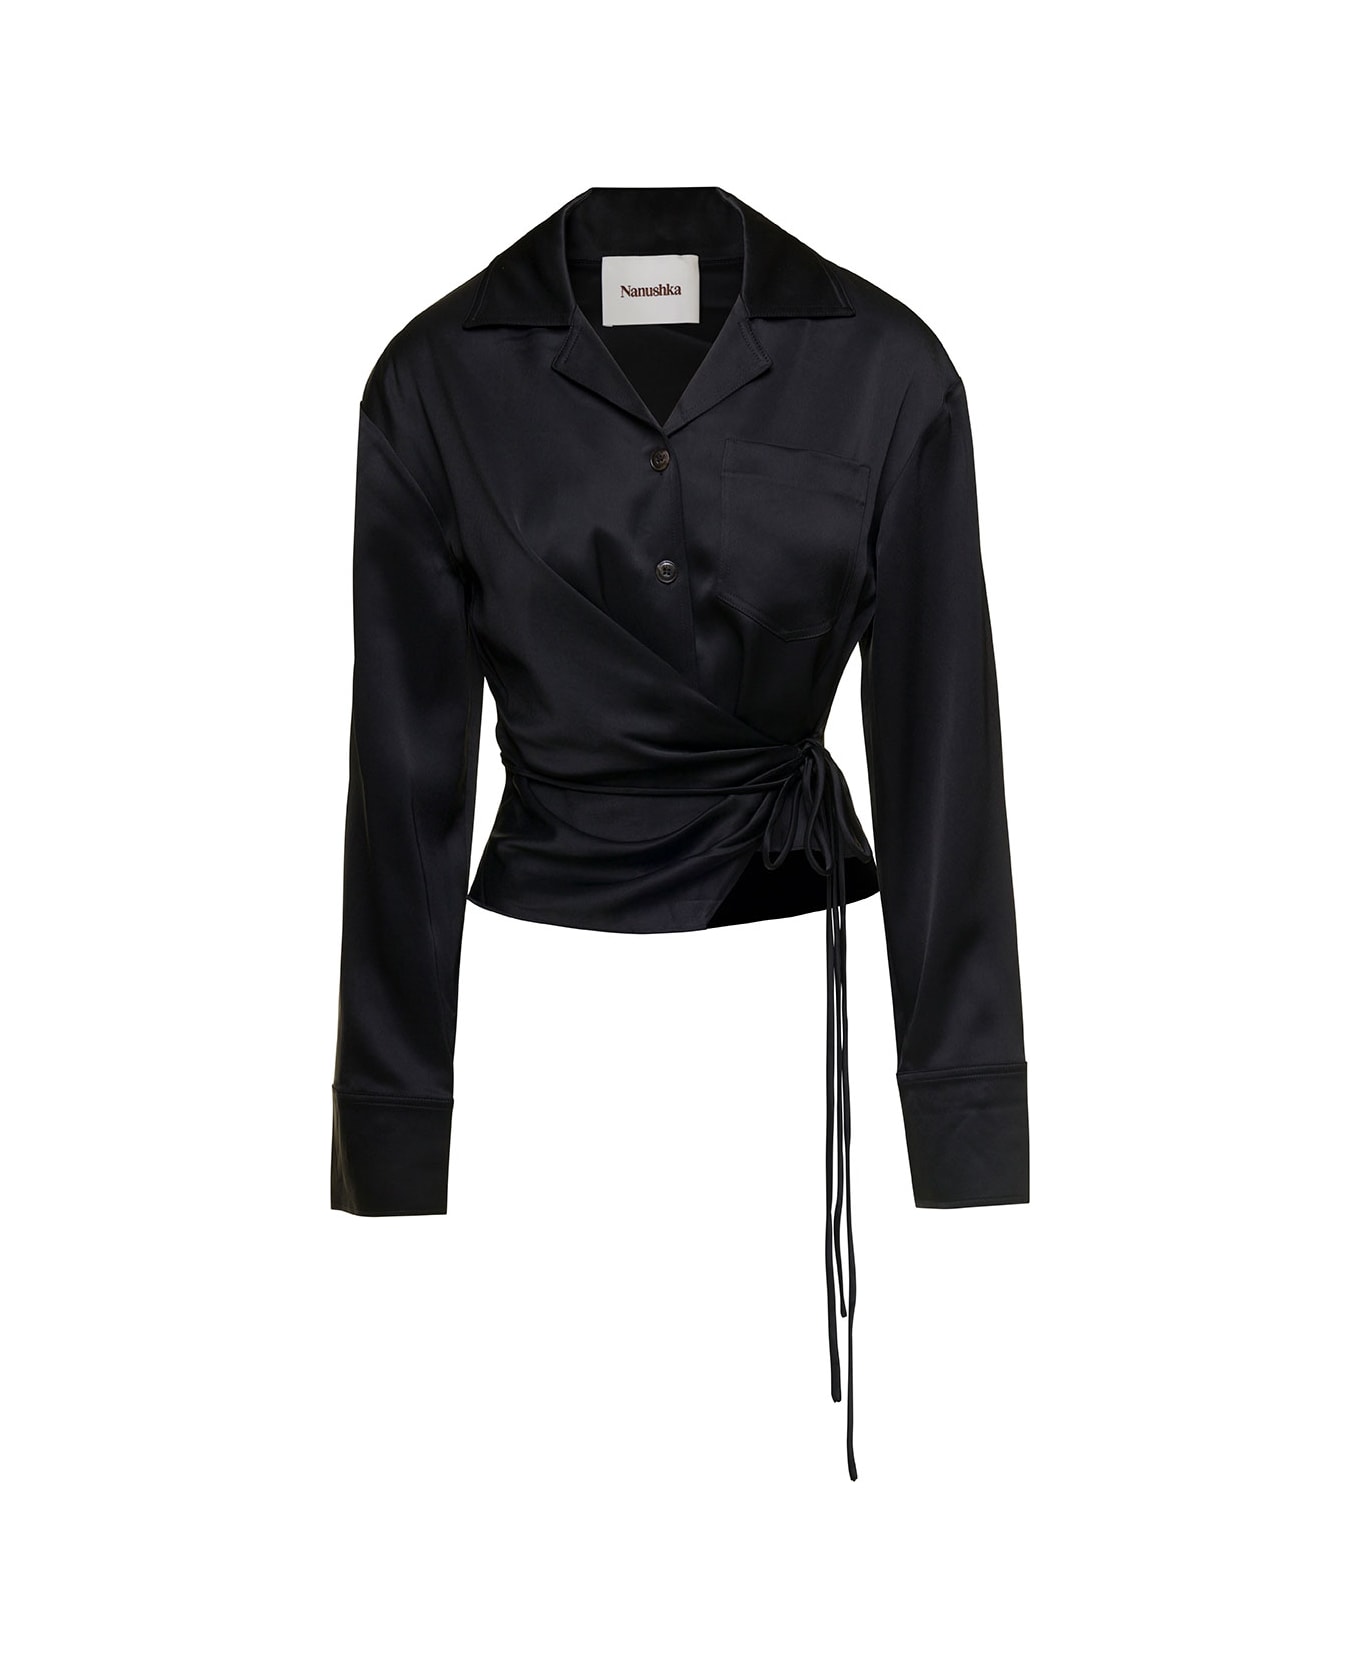 Nanushka Black Shirt With Cuban Collar In Satin Fabric Woman - Black シャツ